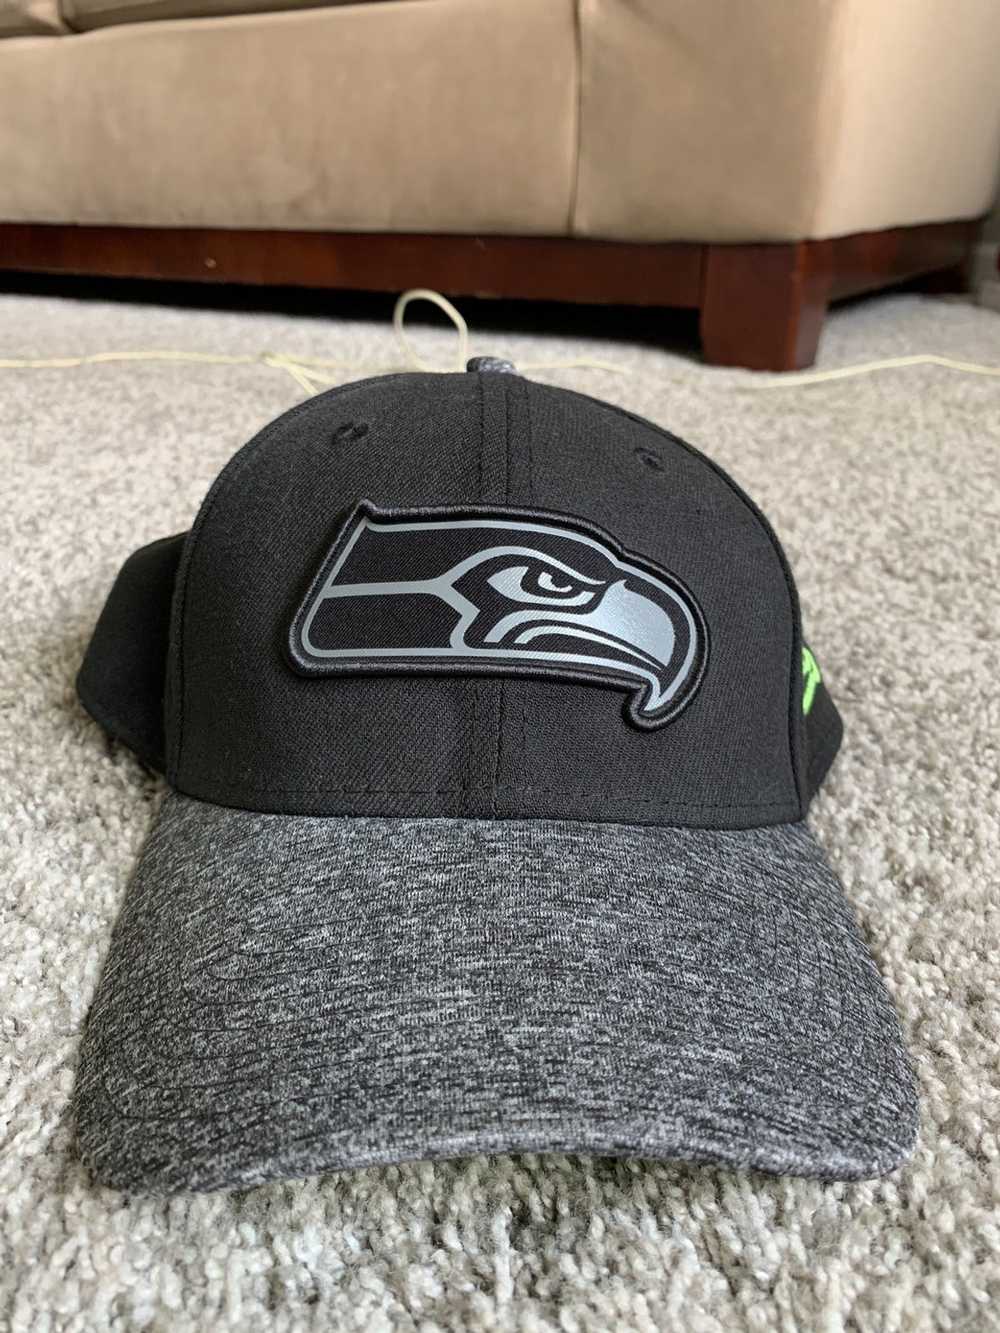 New Era Seahawks Hat - image 1